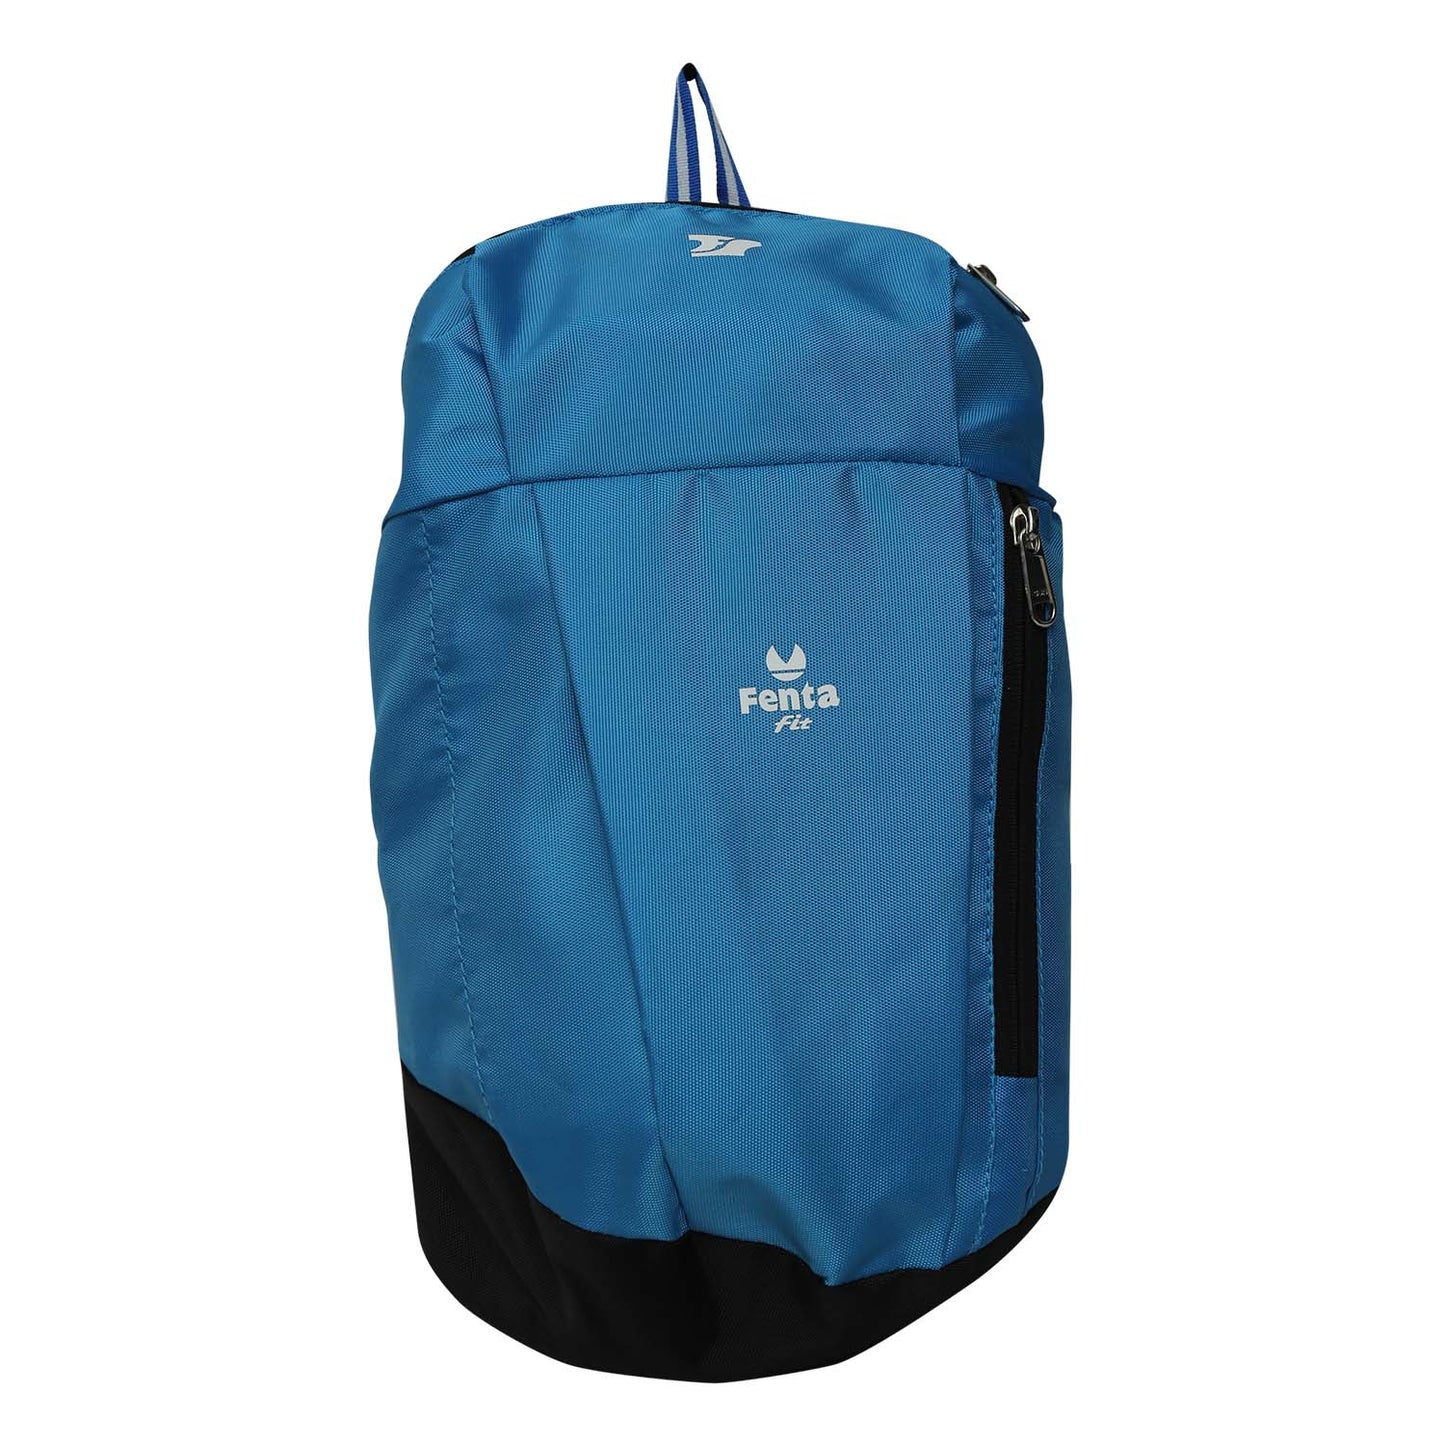 Fenta Sports Unisex Backpack (Blue & Black)